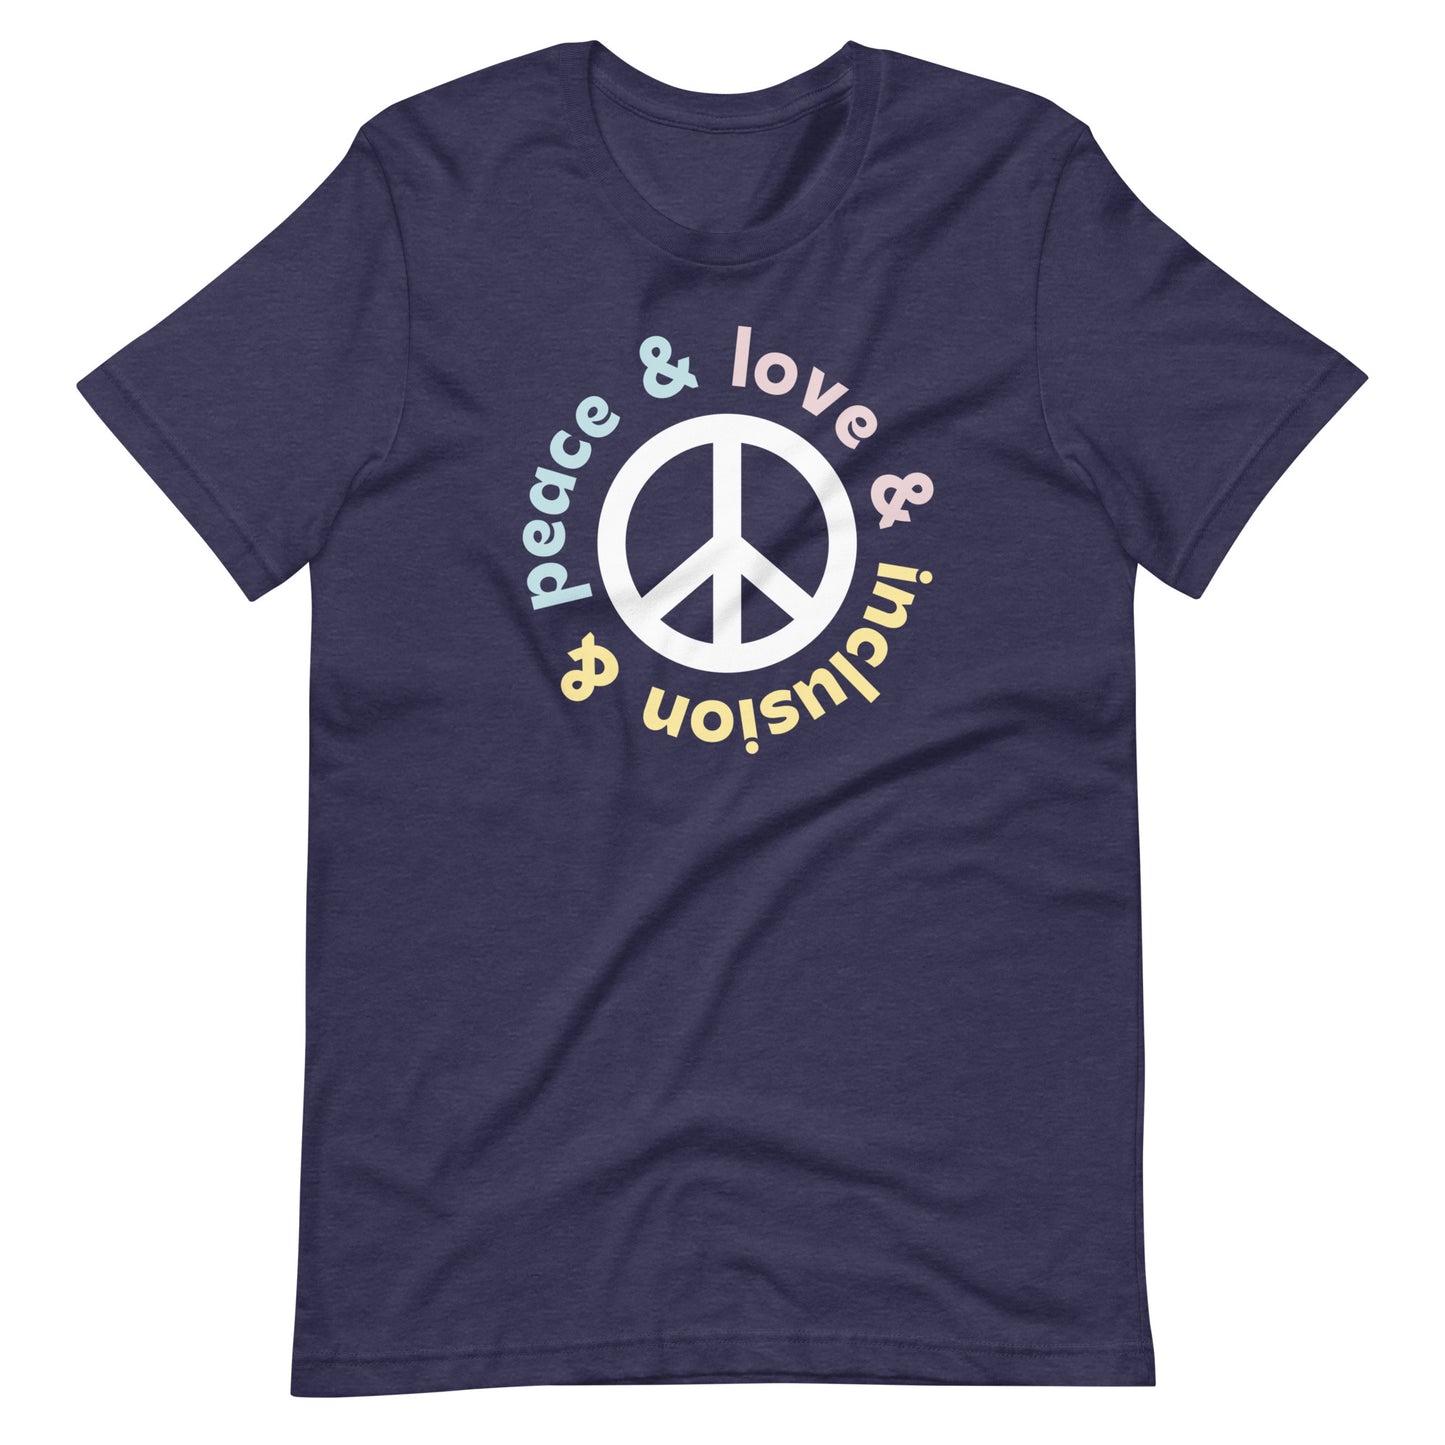 Peace & Love & Inclusion | Adult Unisex Tee